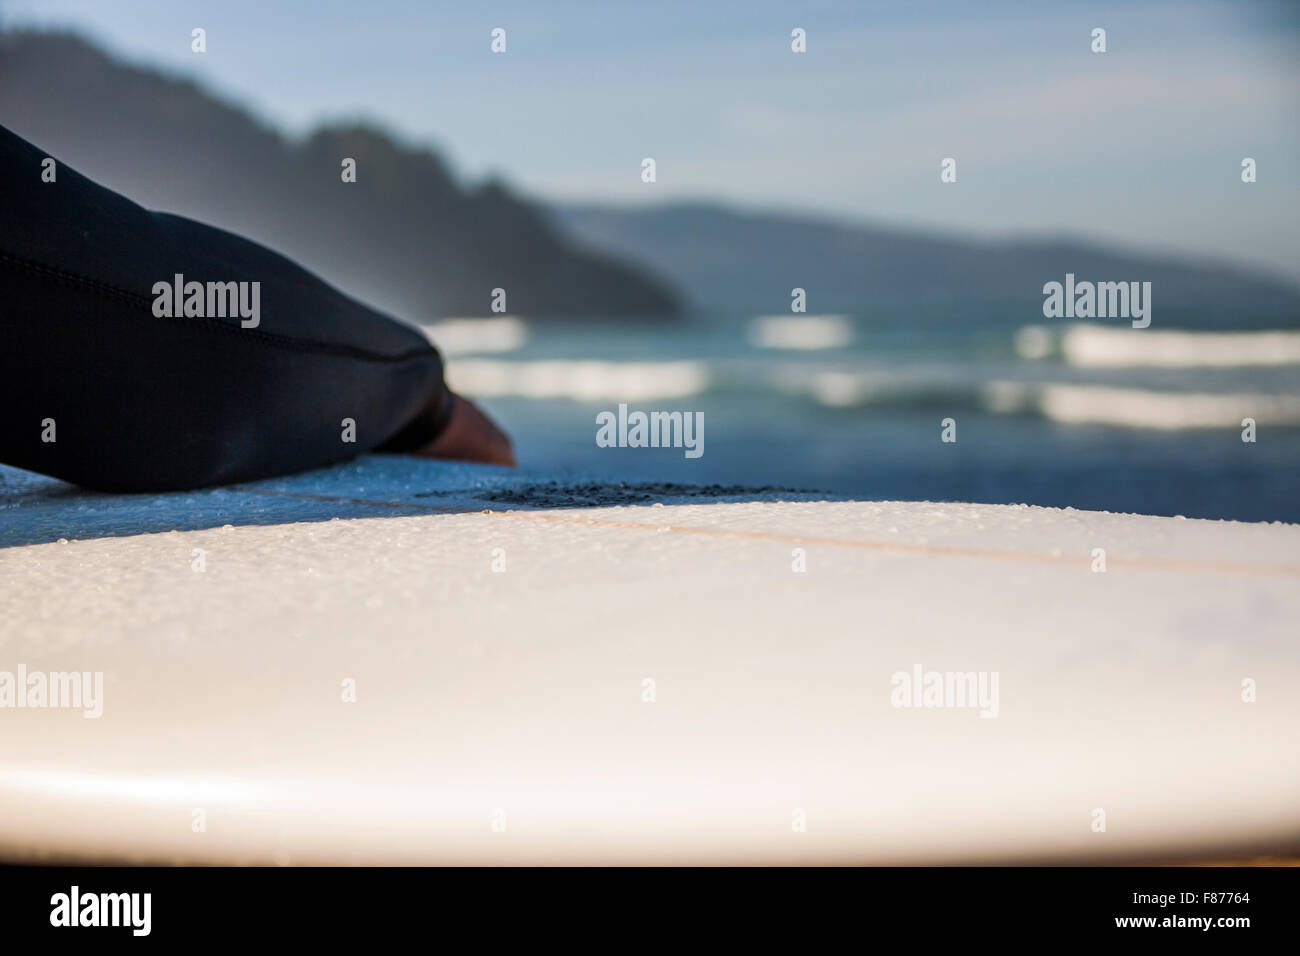 Surfer am Strand mit seinem Brett sitzen Stockfoto